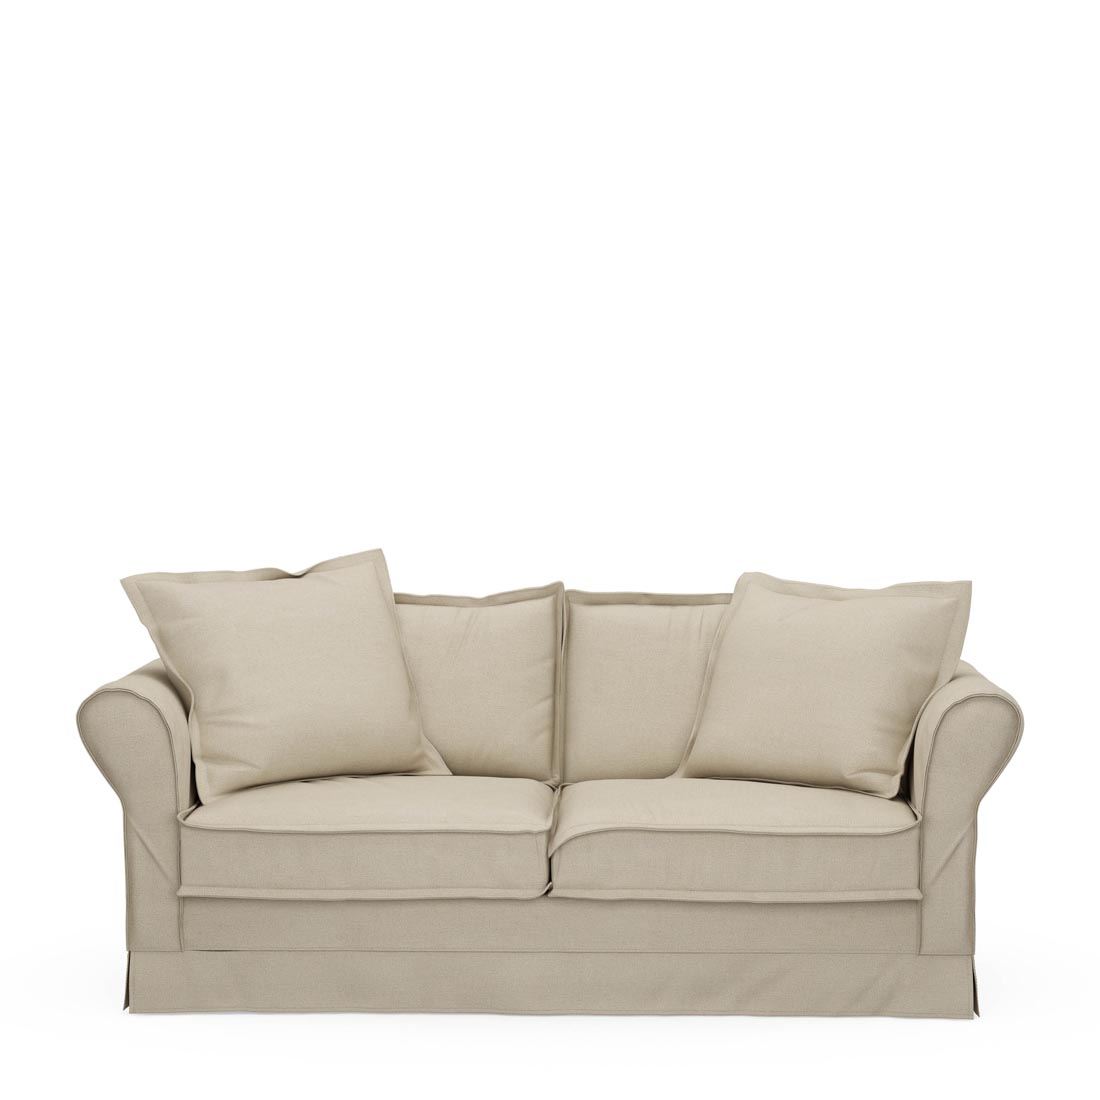 Rivièra Maison - Carlton Sofa 2,5 Seater, oxford weave, flanders flax - Kleur: beige